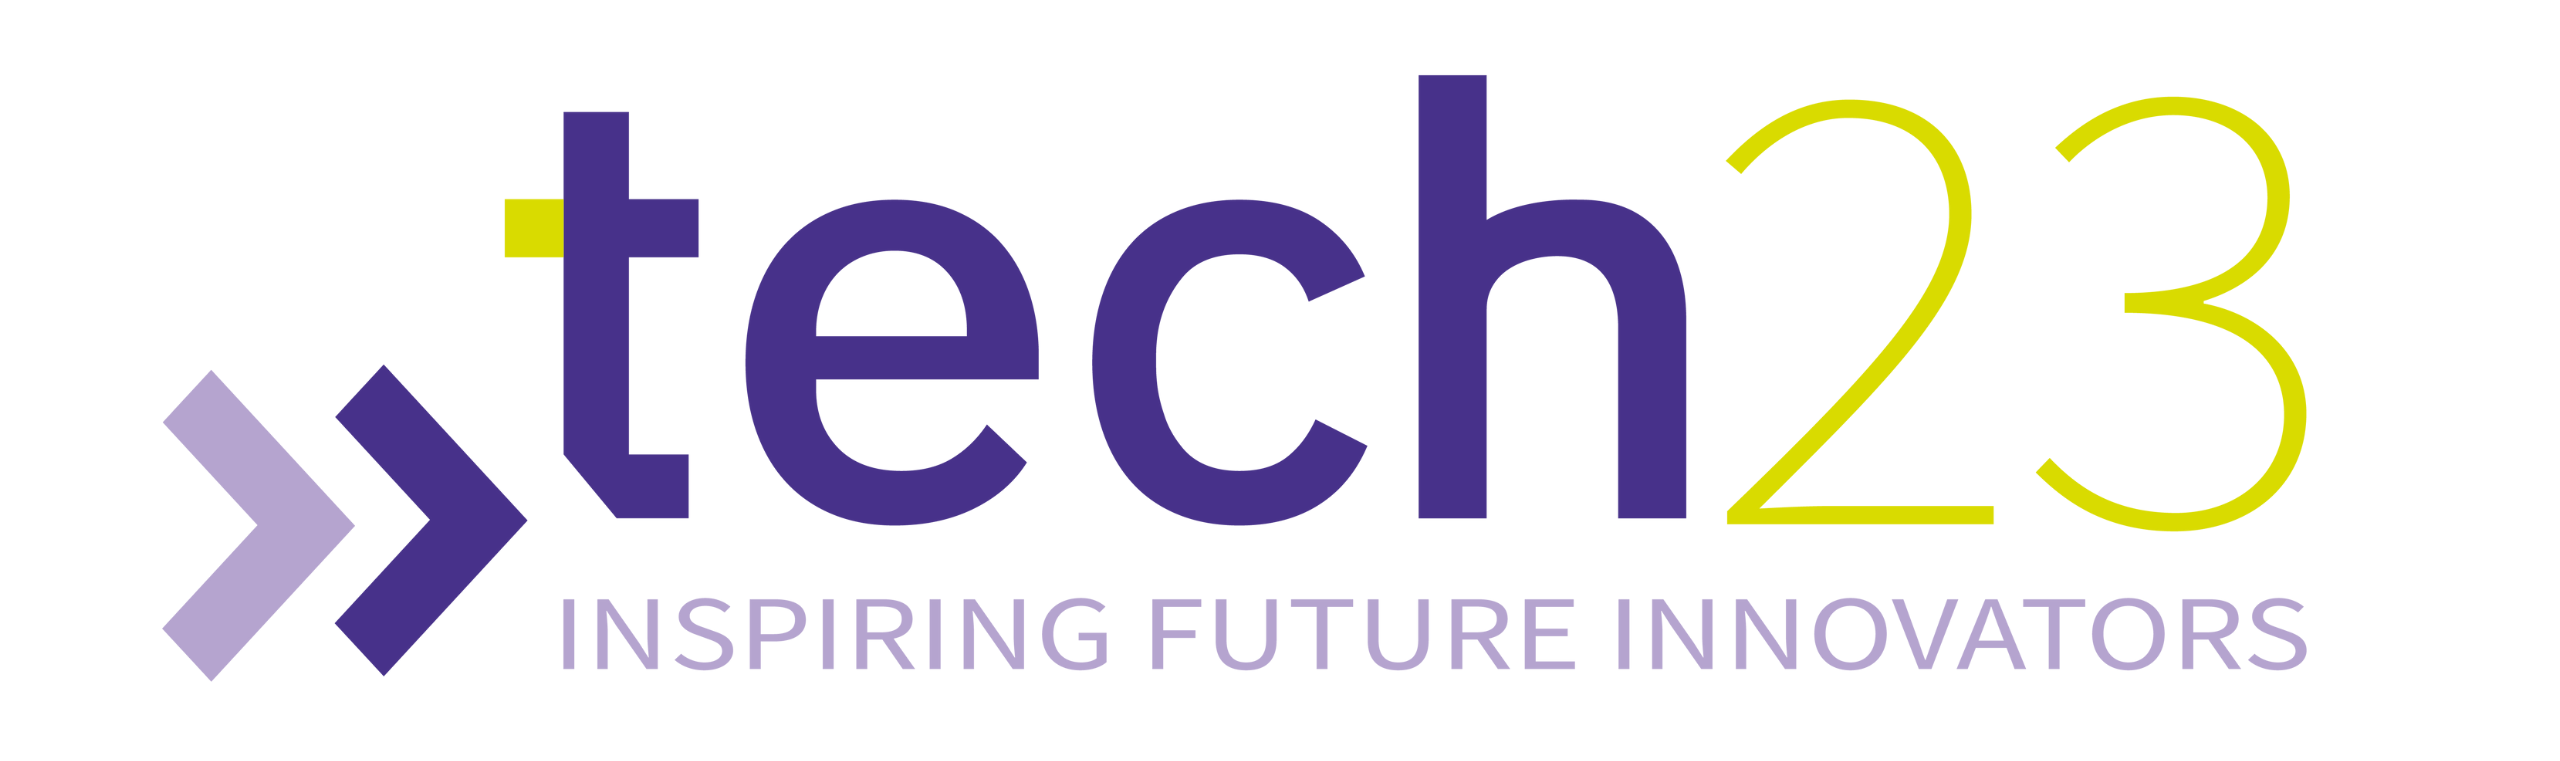 Tech23 – Inspiring Future Innovators